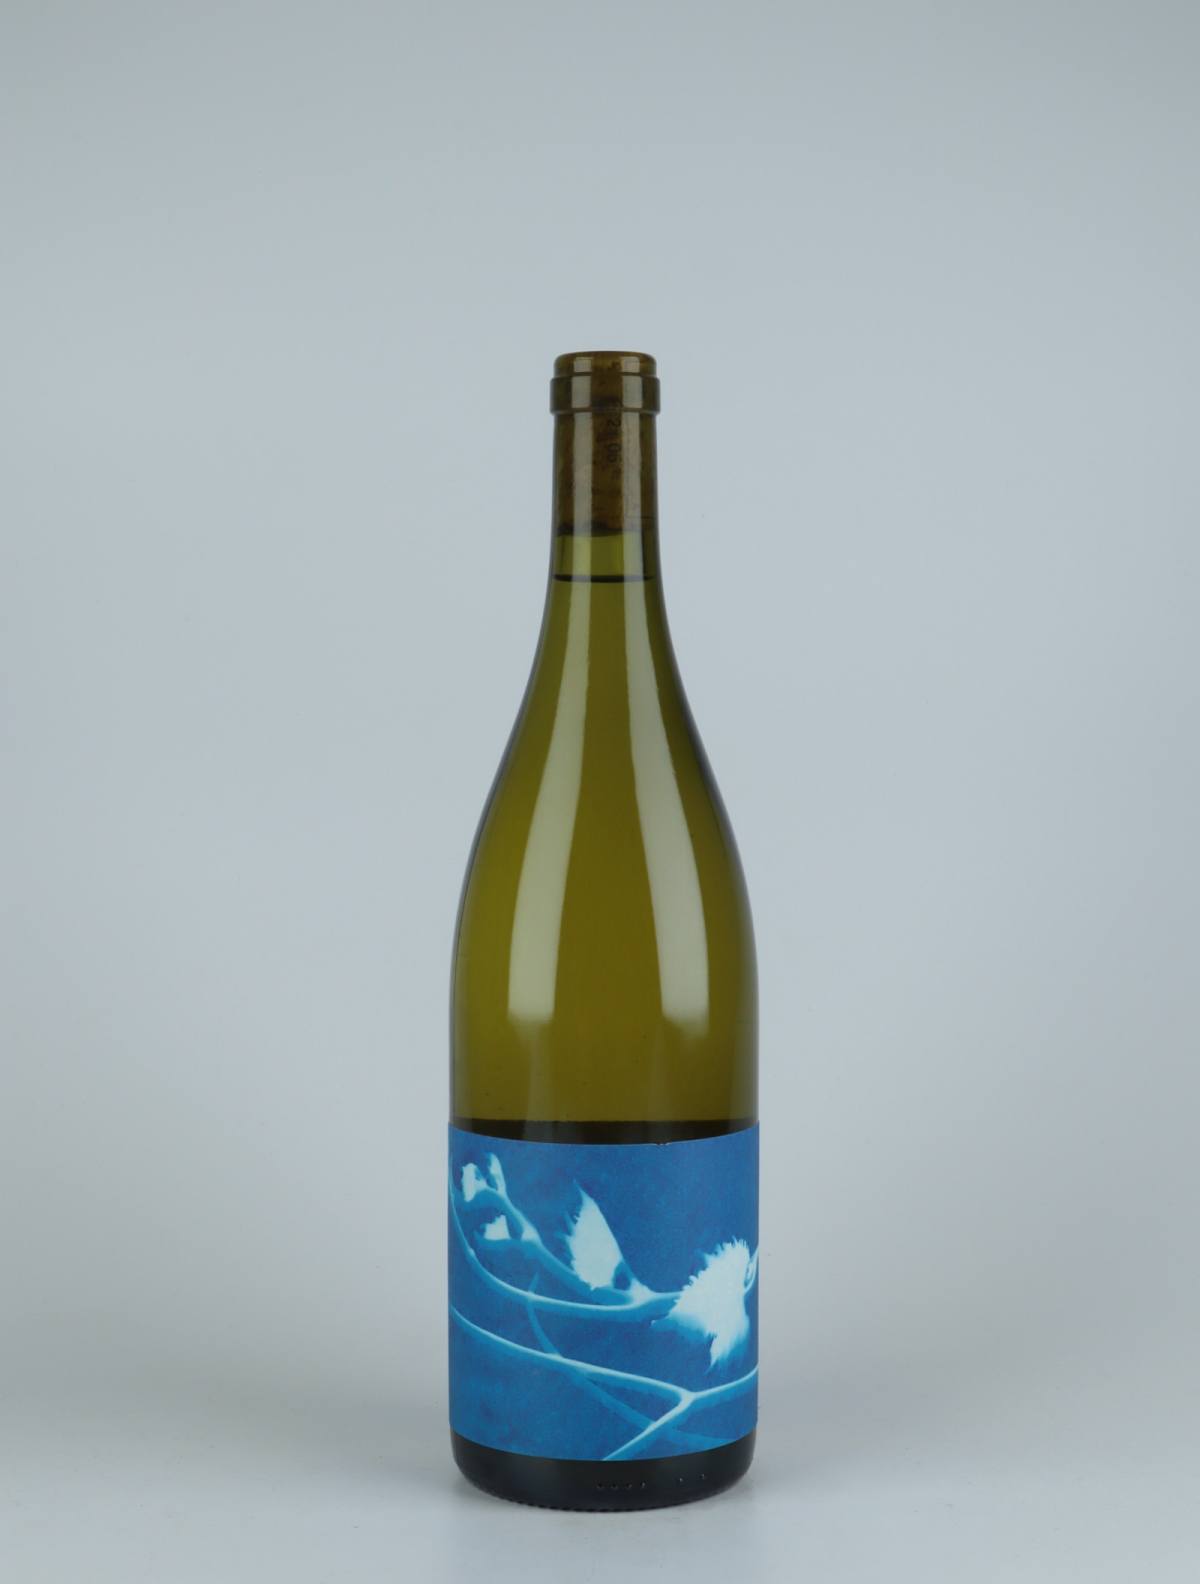 A bottle 2019 Le Rayon Blanc White wine from Thomas Puéchavy, Loire in France